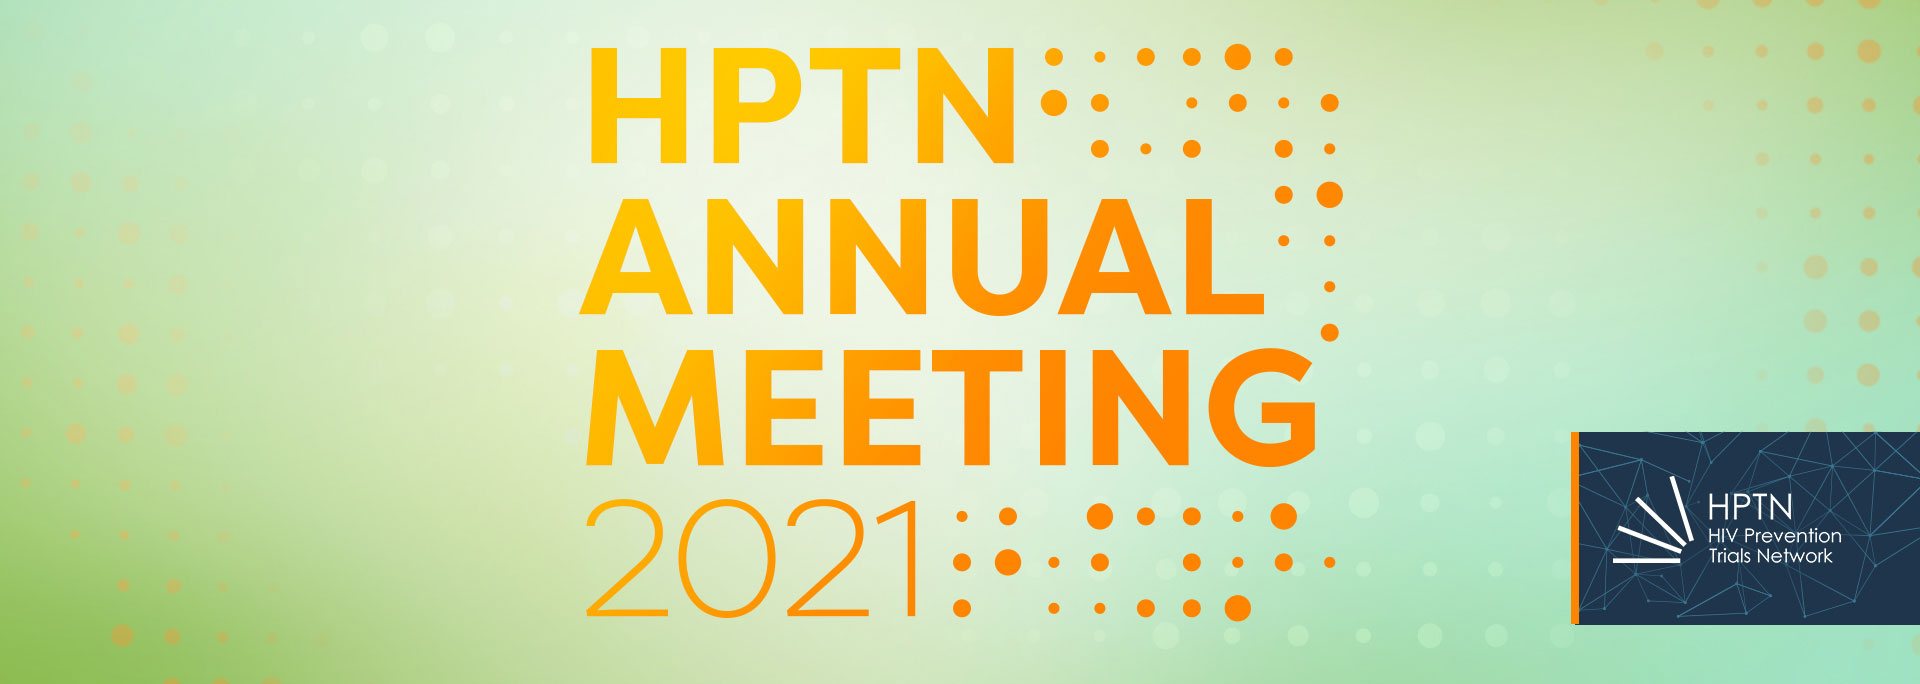 2021 Annual Meeting banner